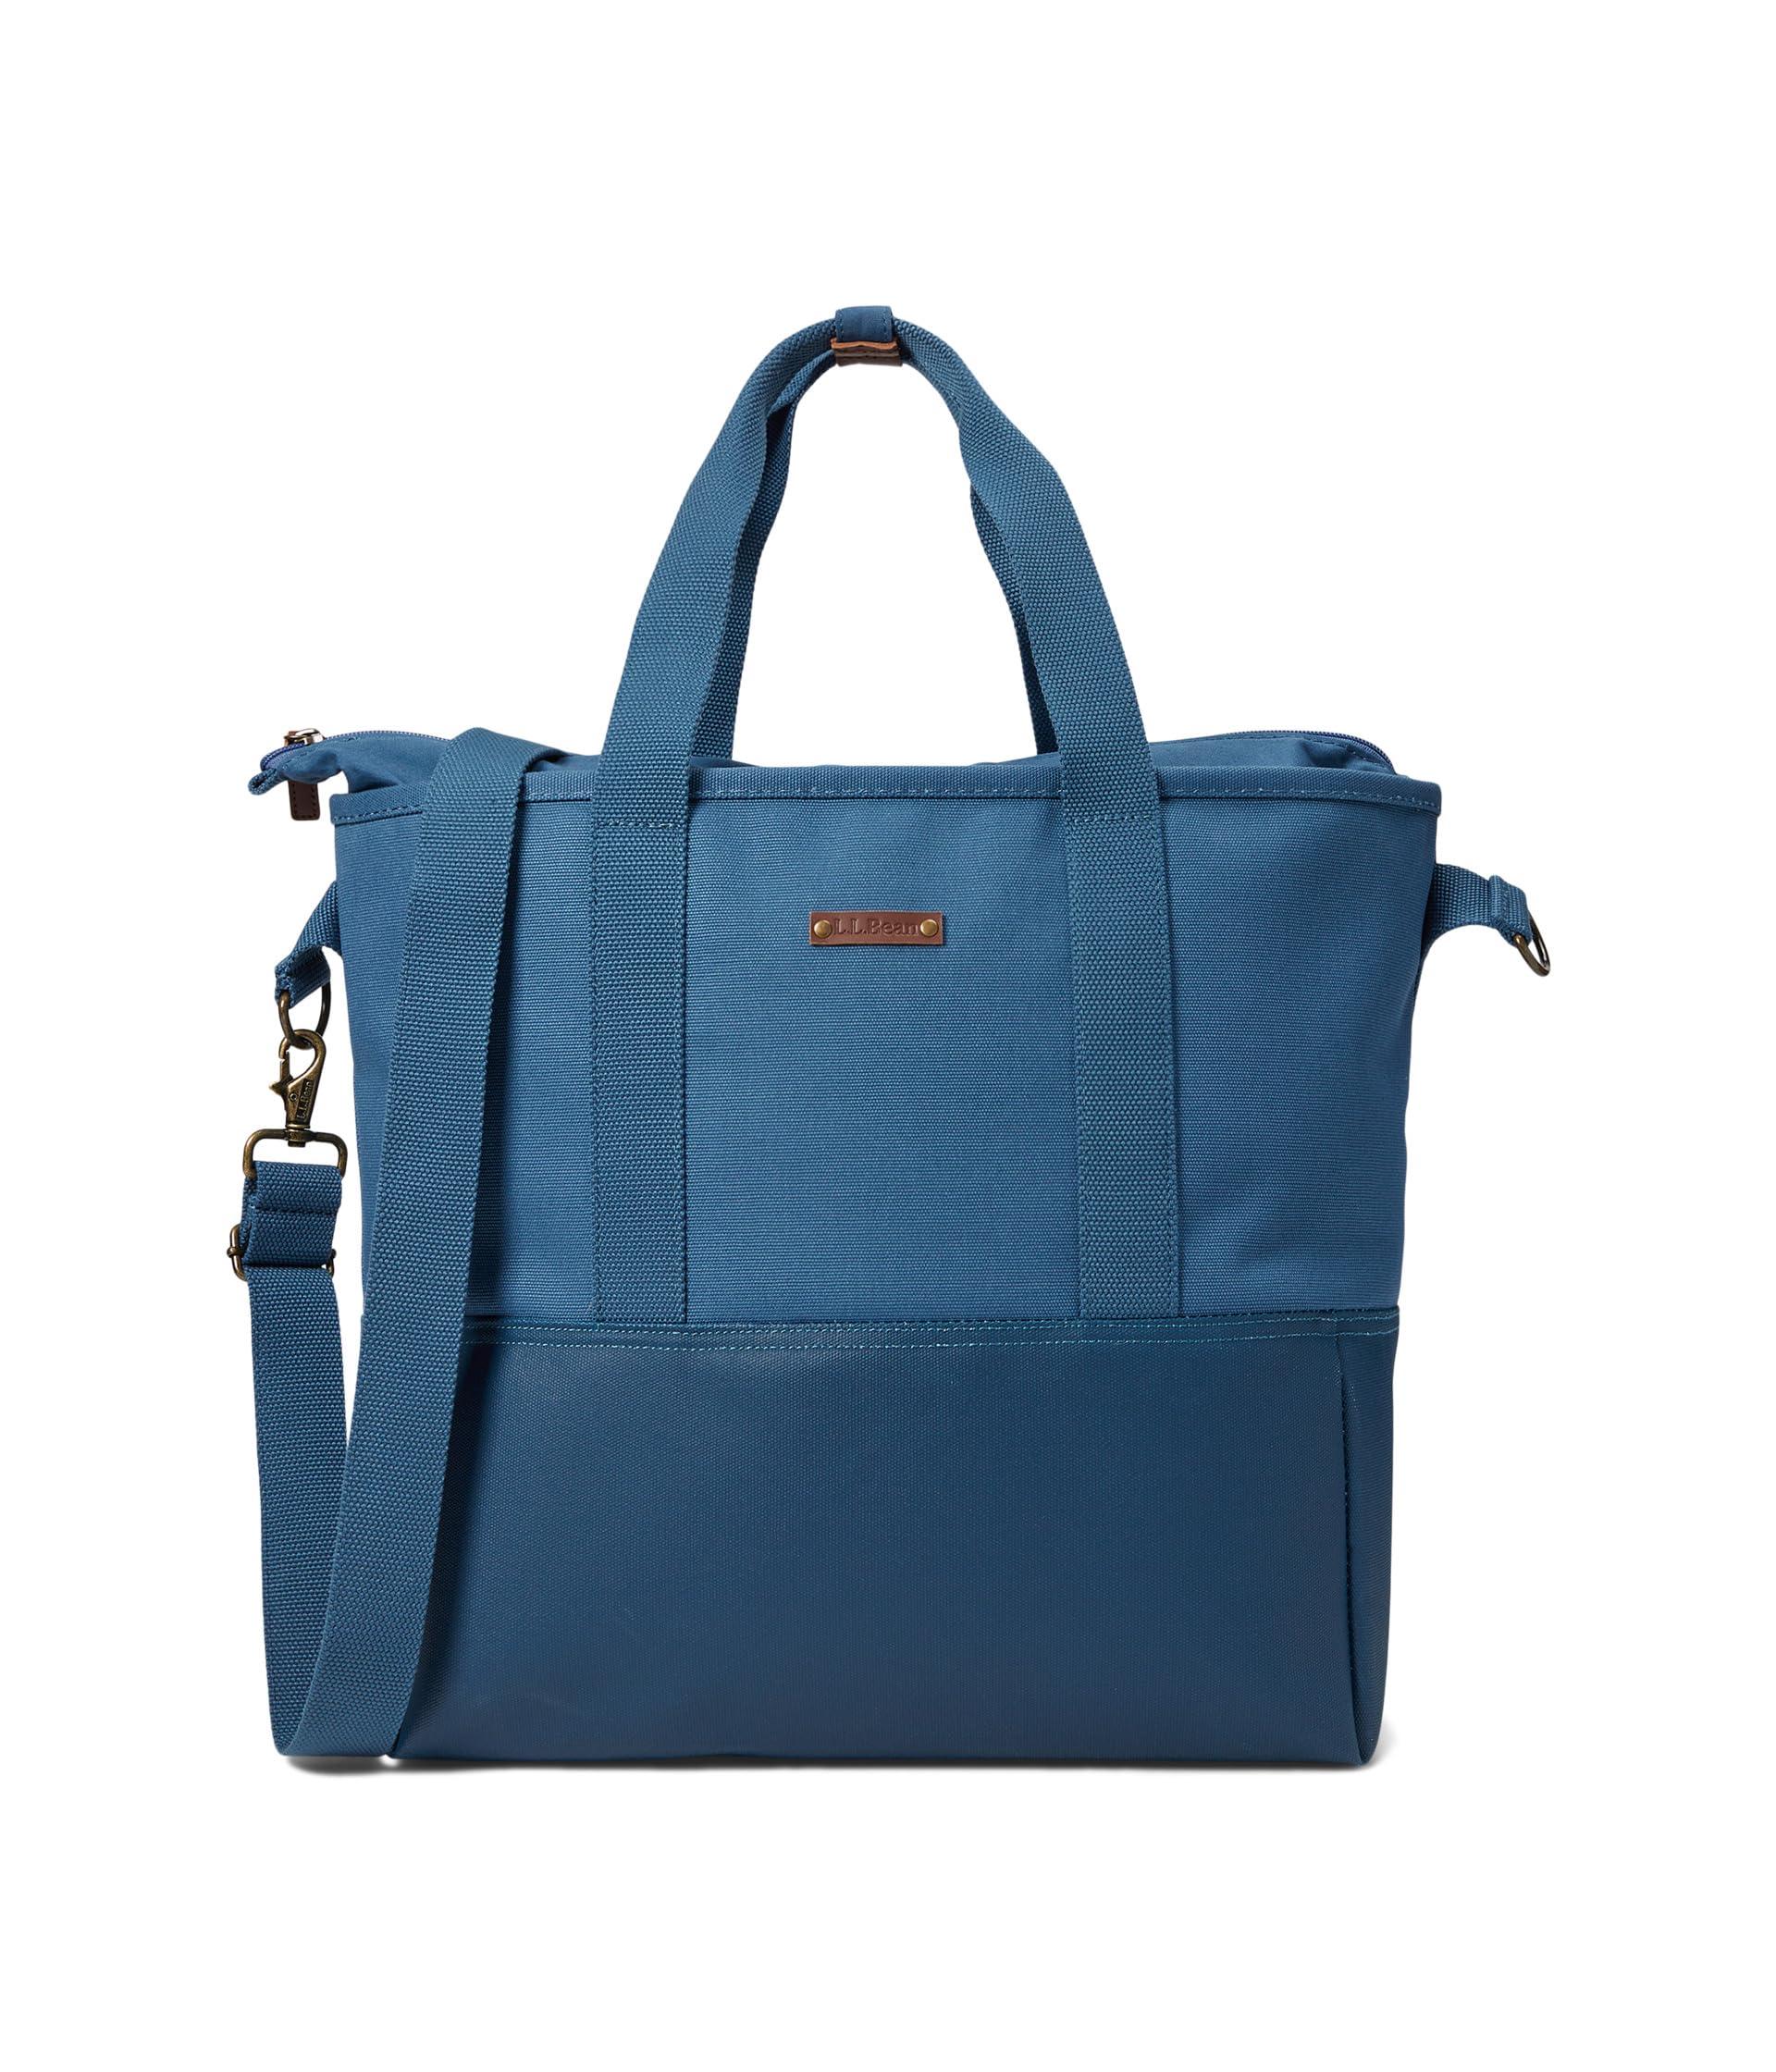 L.L. Bean Nor'easter Tote Bag in Blue